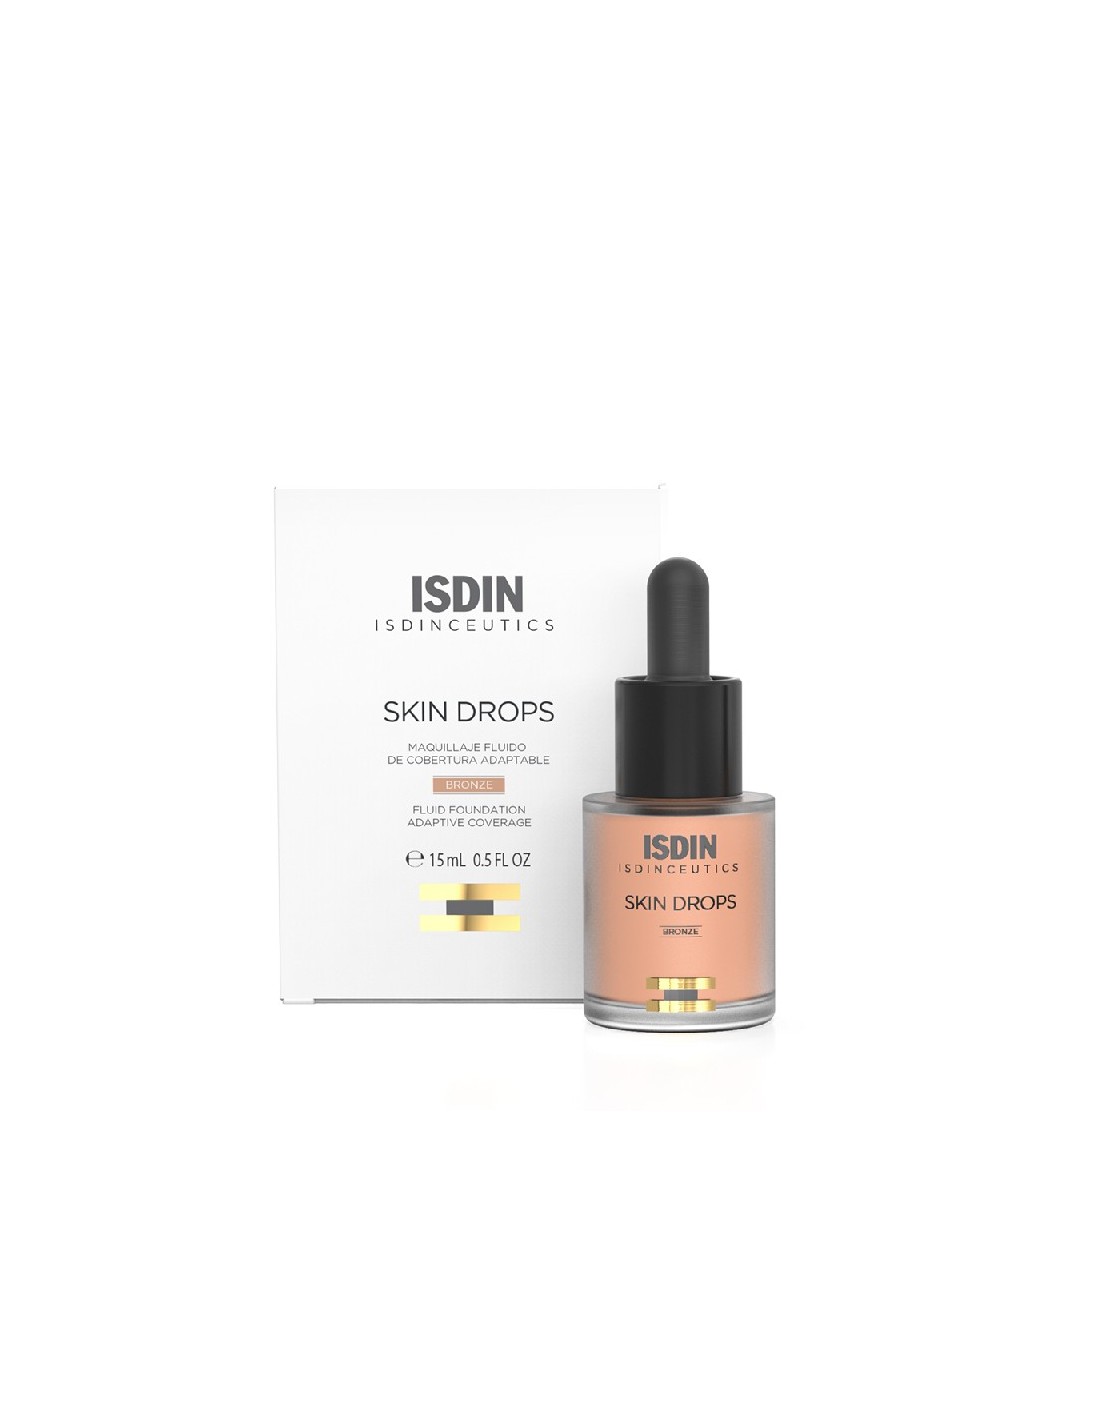 https://pharmapiel.com.co/3255-thickbox_default/isdinceutics-skin-drops-bronce-isdin.jpg